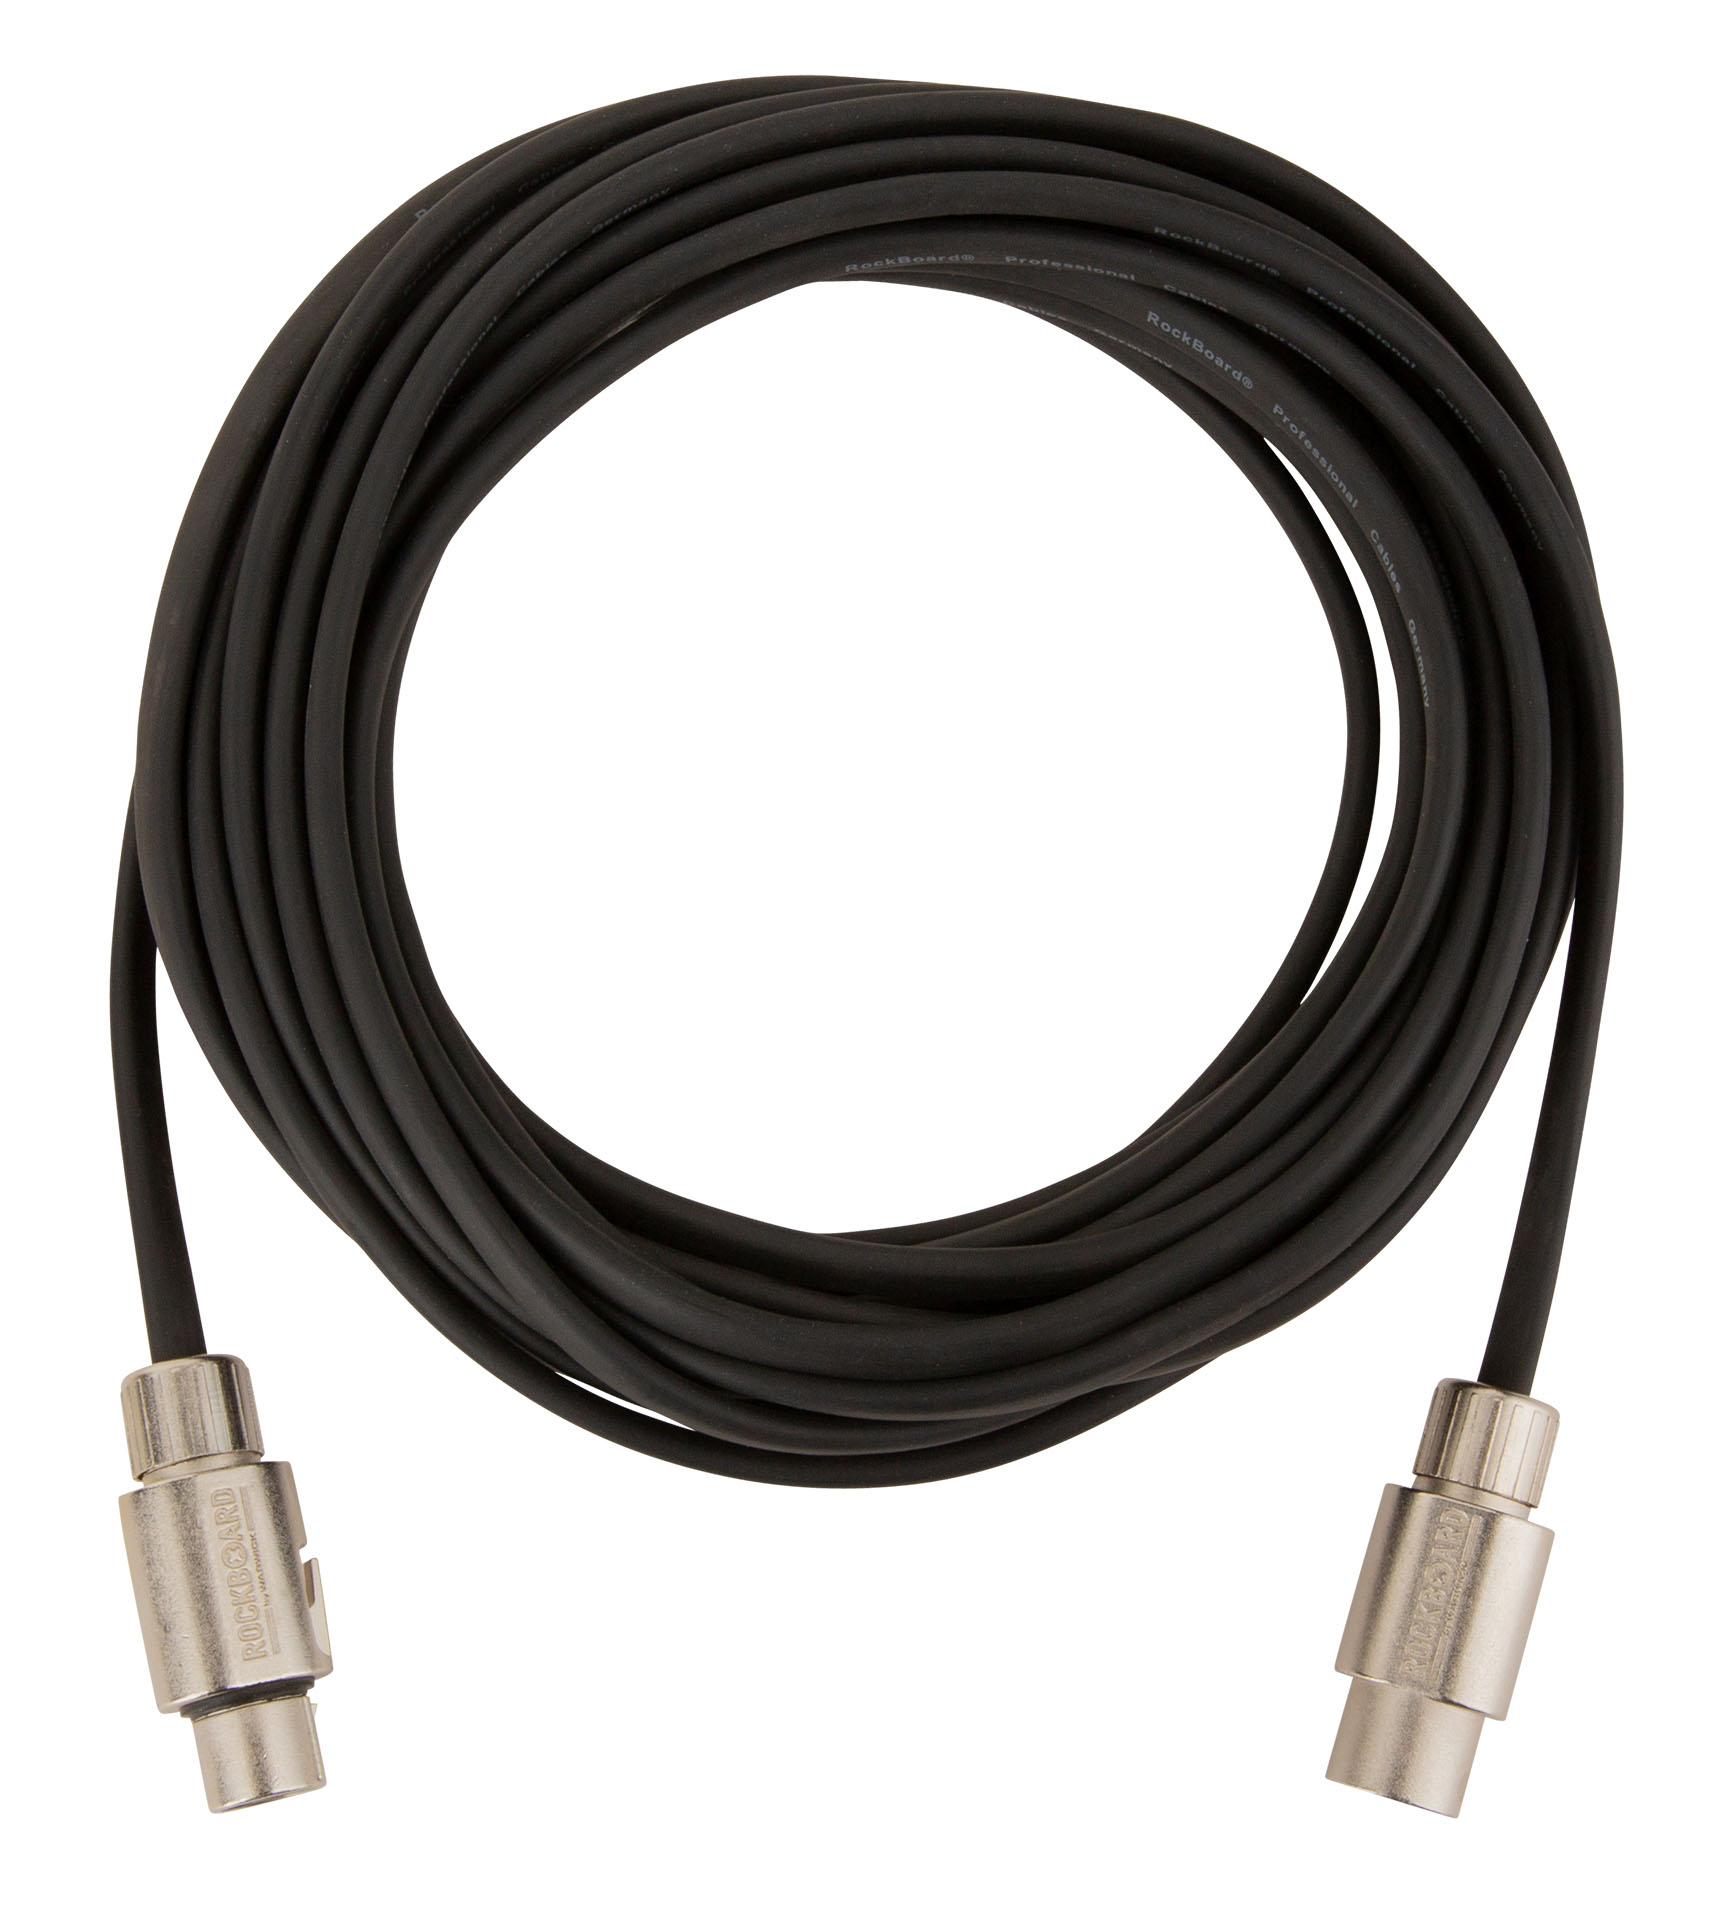 RockBoard Flat XLR Cable - 900 cm / 354 21/64"